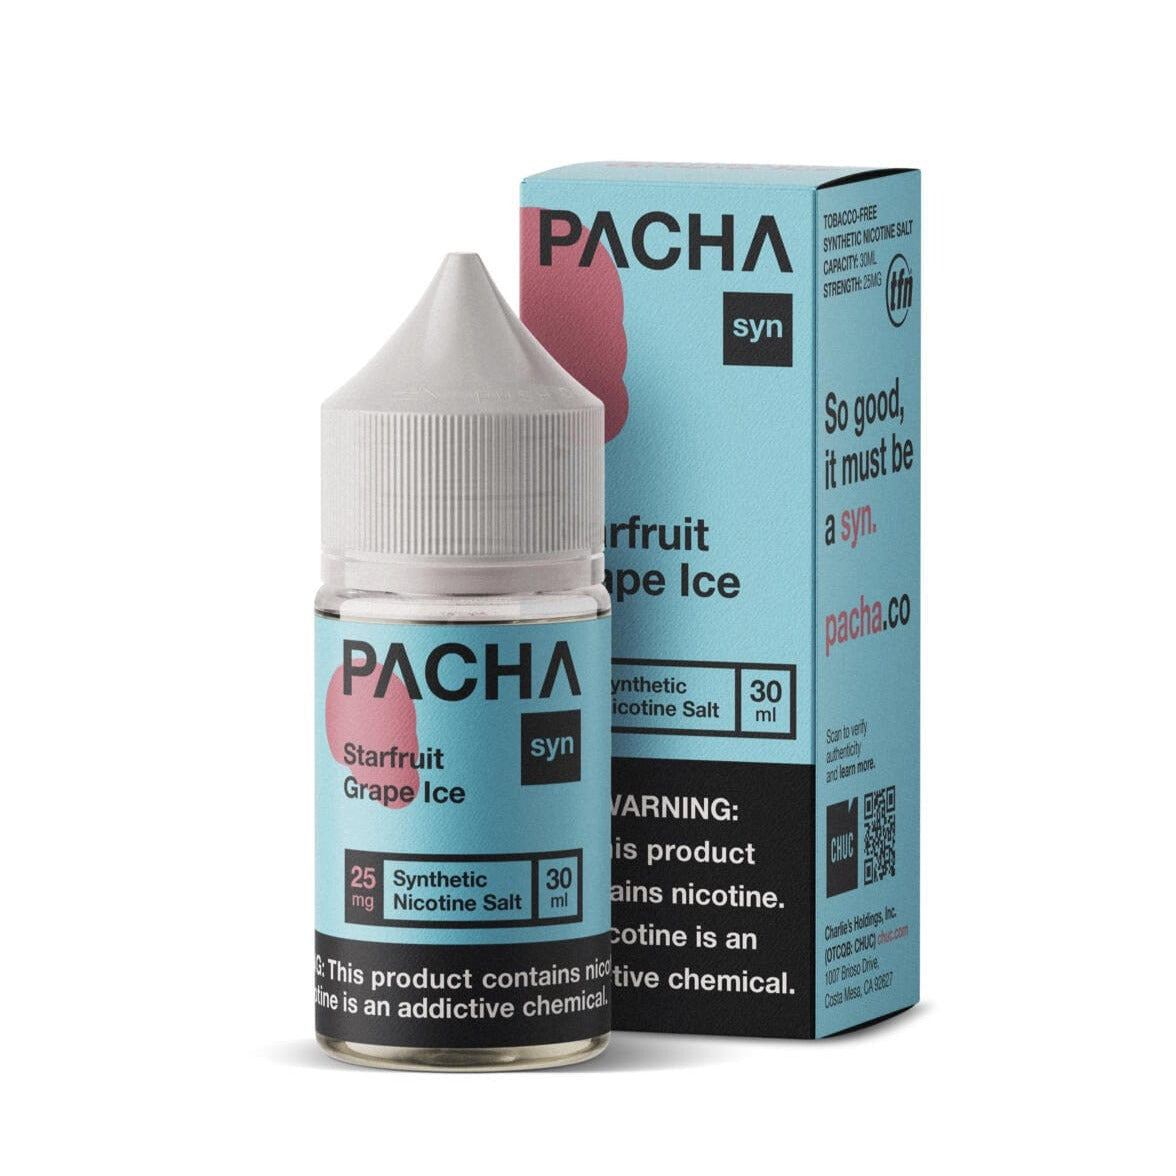 Pachamama Juice PACHA syn Starfruit Grape Ice 30ml Nic Salt Vape Juice - Pachamama